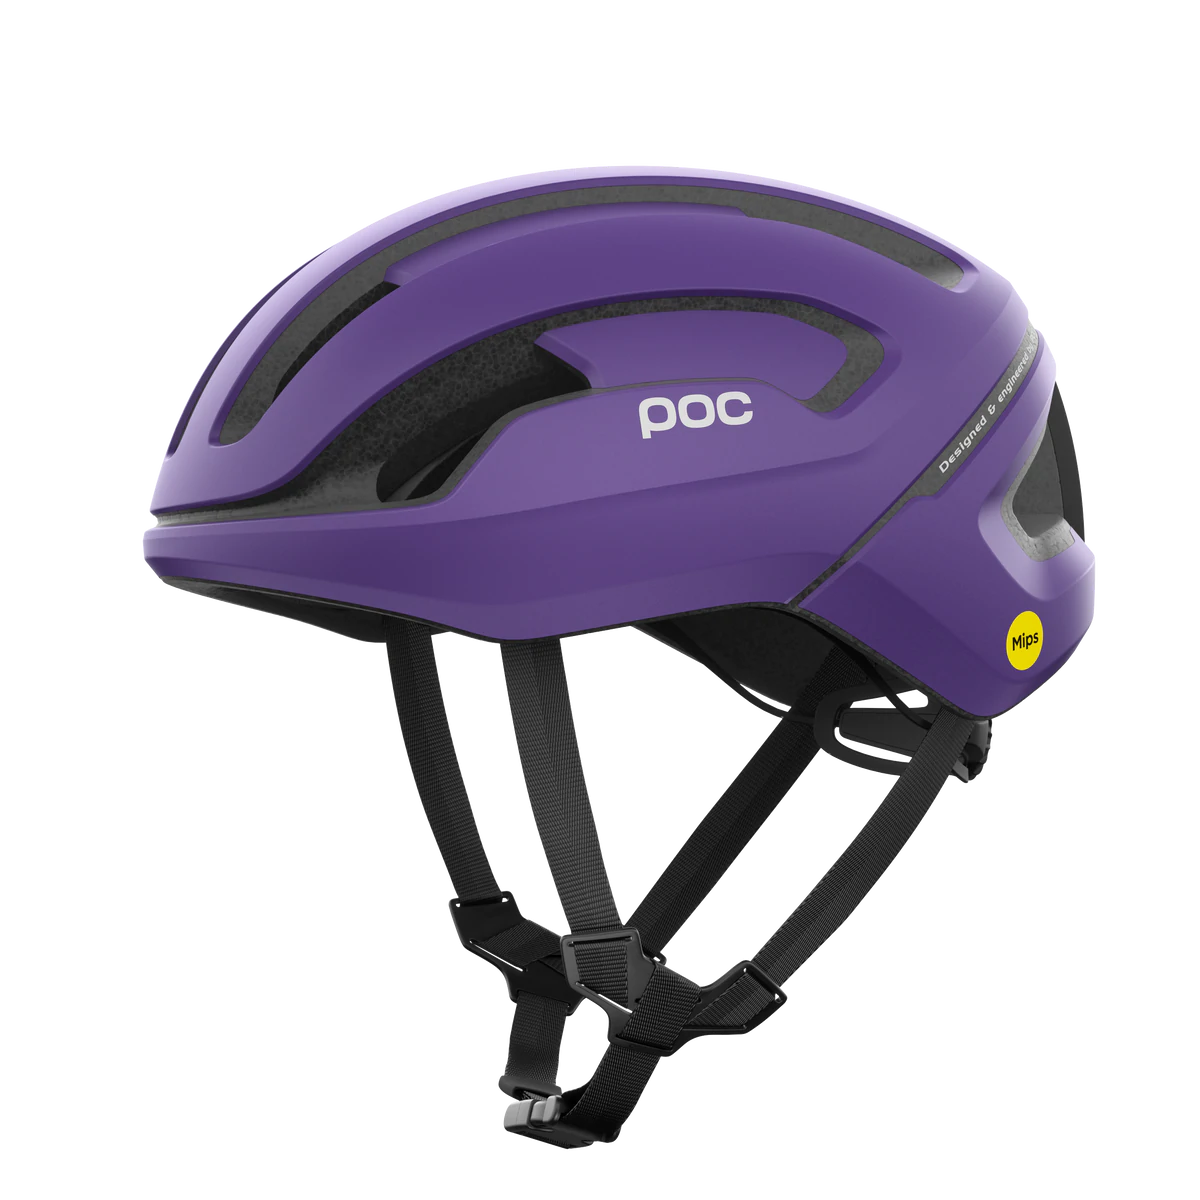 JCF公認ロードバイク用ヘルメット 10772-1613 オムネエアミップス アジアンフィット Omne Air Wf Mips Asian-fit - Sapphire Purple Matt [ユニセックス]